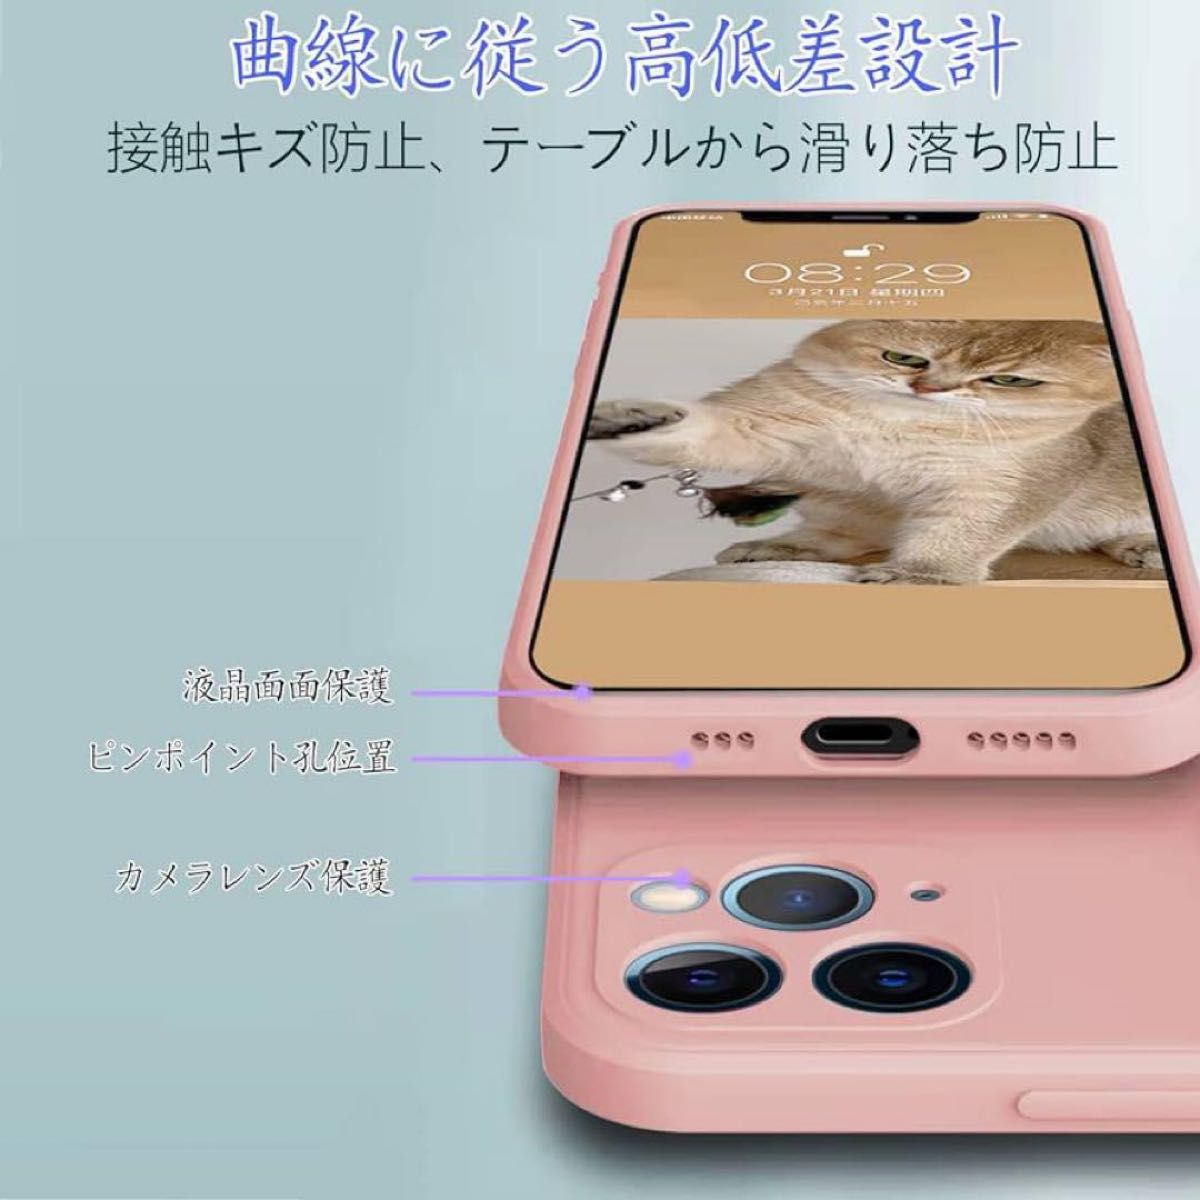 iPhone 11 pro max ケース リング付き 回転 シリコン 全面保護 リング付ケース 耐衝撃 超軽量 指紋防止 ピンク